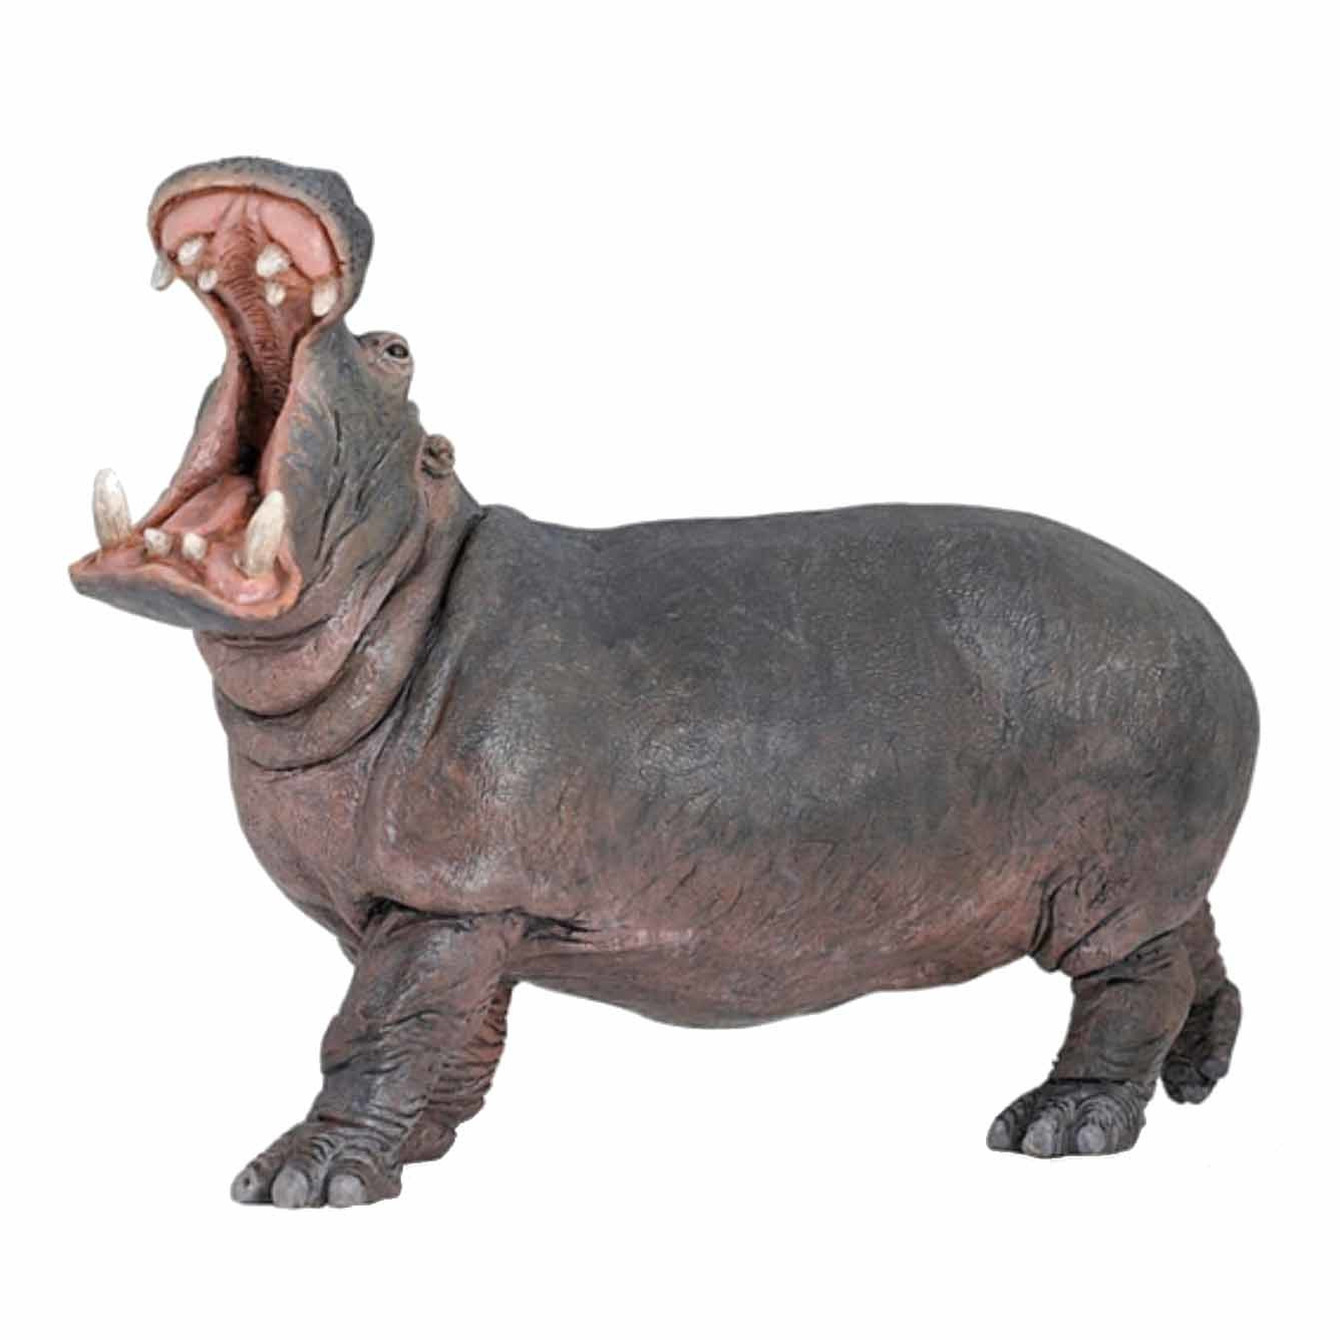 Plastic speelgoed figuur nijlpaard 15 cm